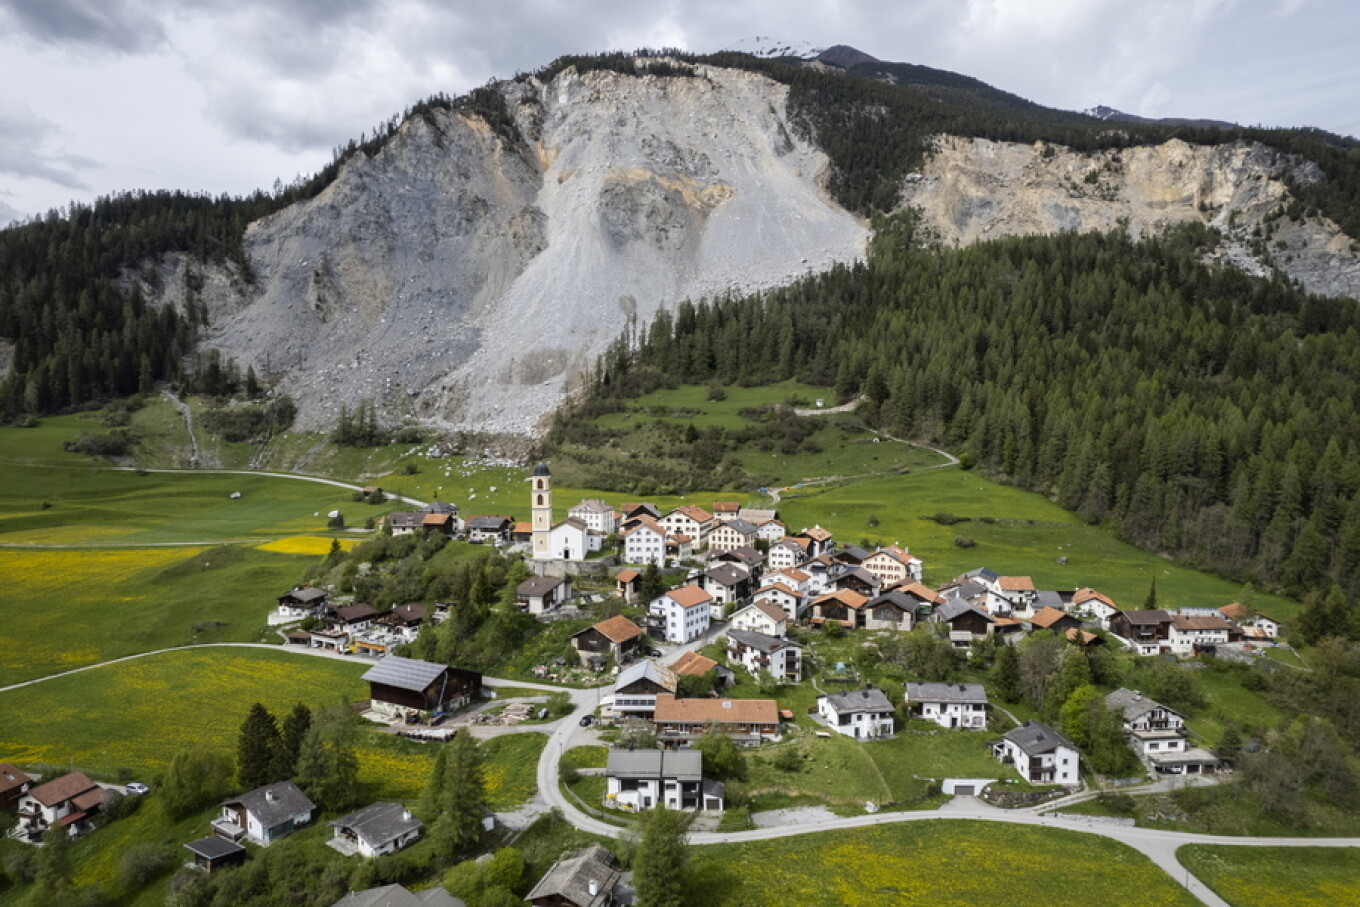 More information about "Ελβετία: Εκκενώνεται οικισμός στις Άλπεις που απειλείται από κατολίσθηση"